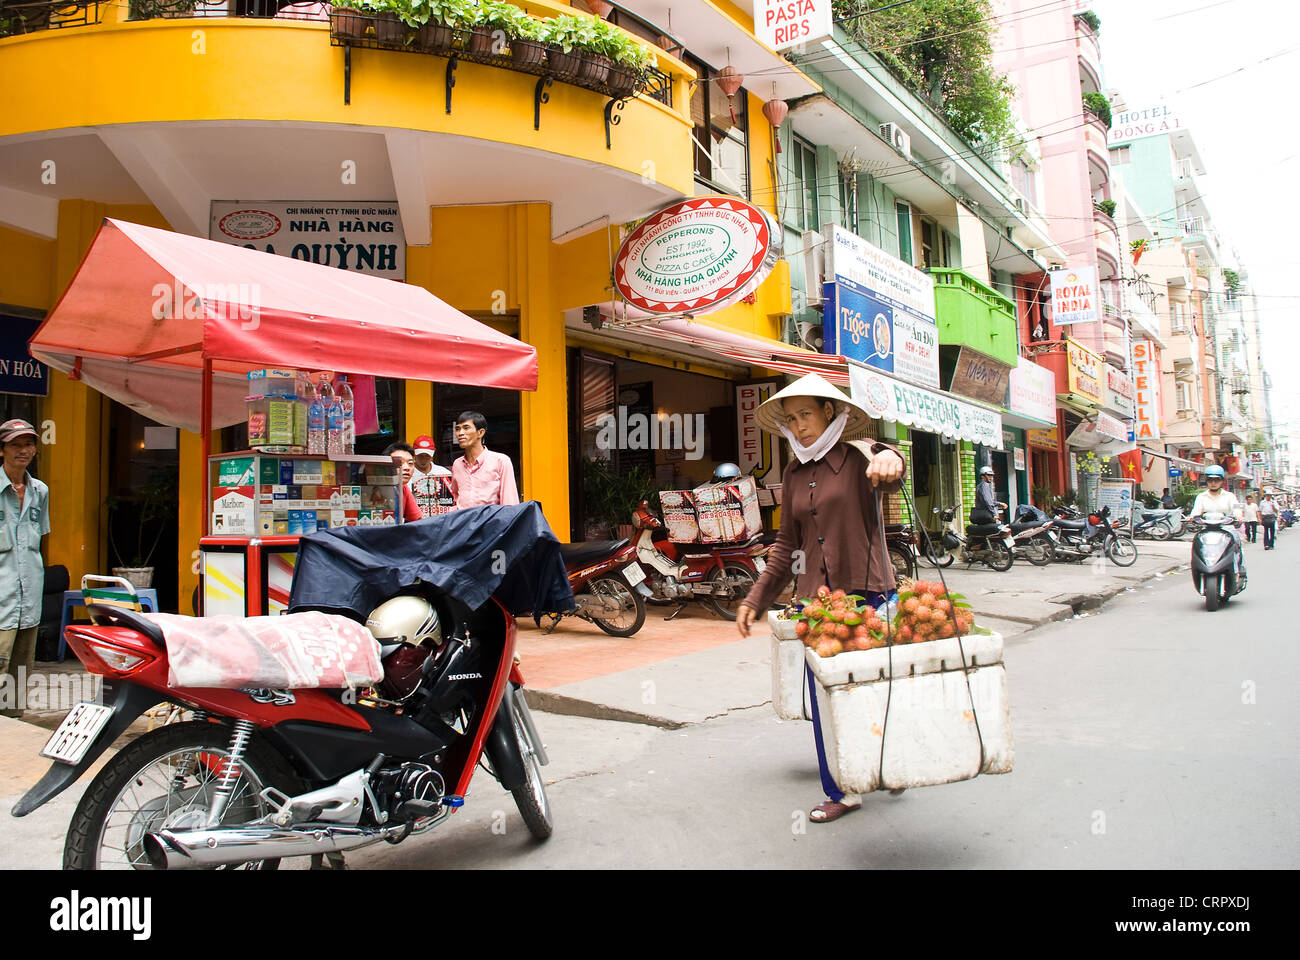 Scène de rue, Bui vien, Ho Chi Minh City, Vietnam Banque D'Images